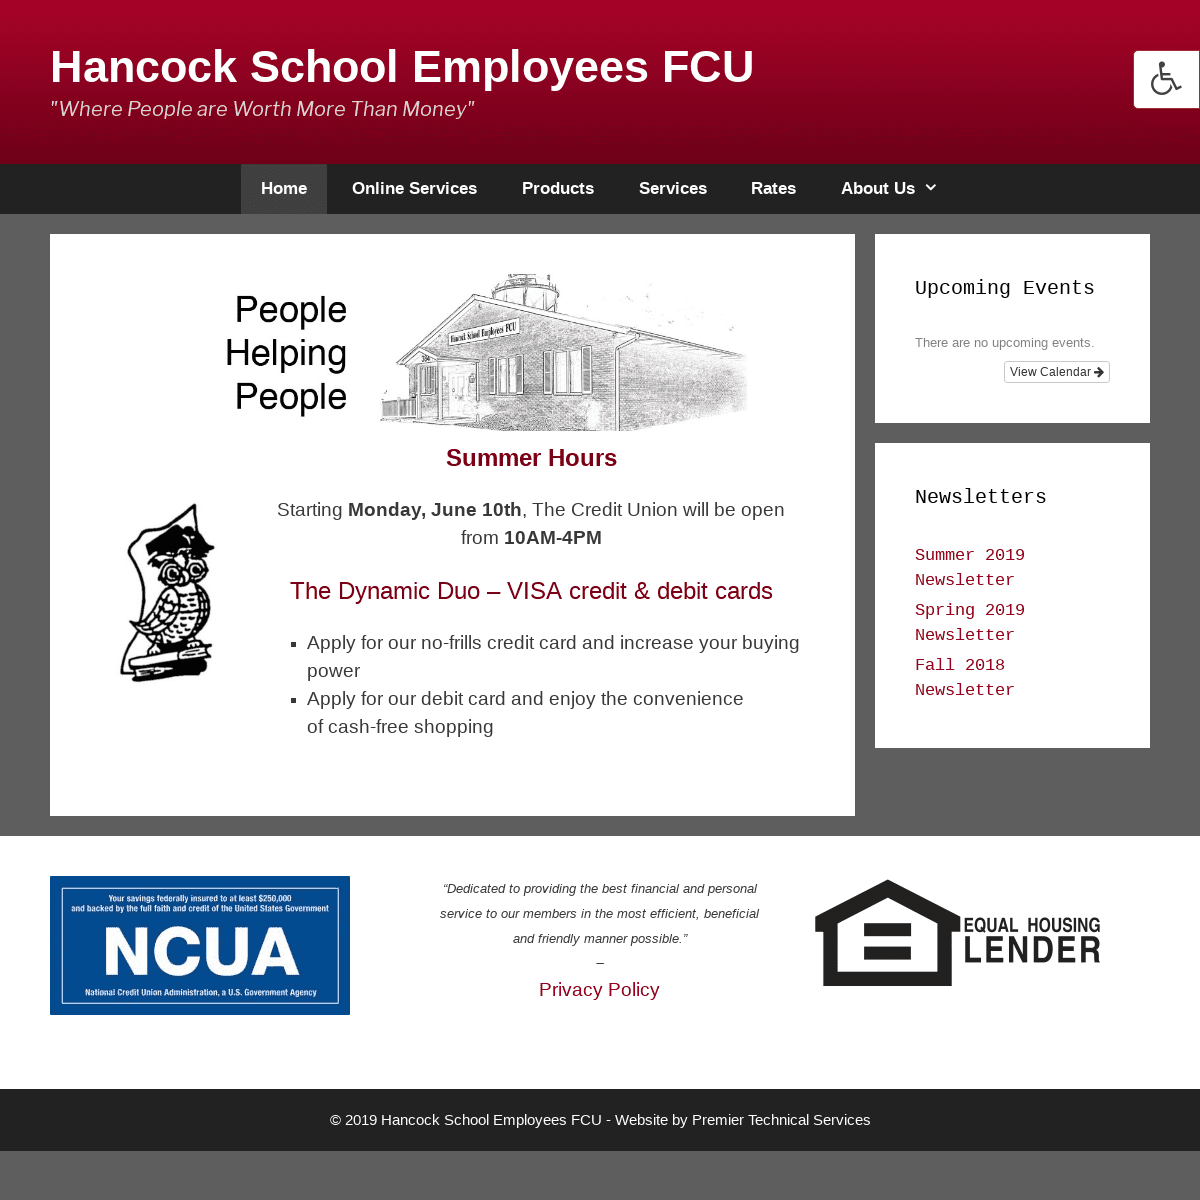 A complete backup of hsefcu.com